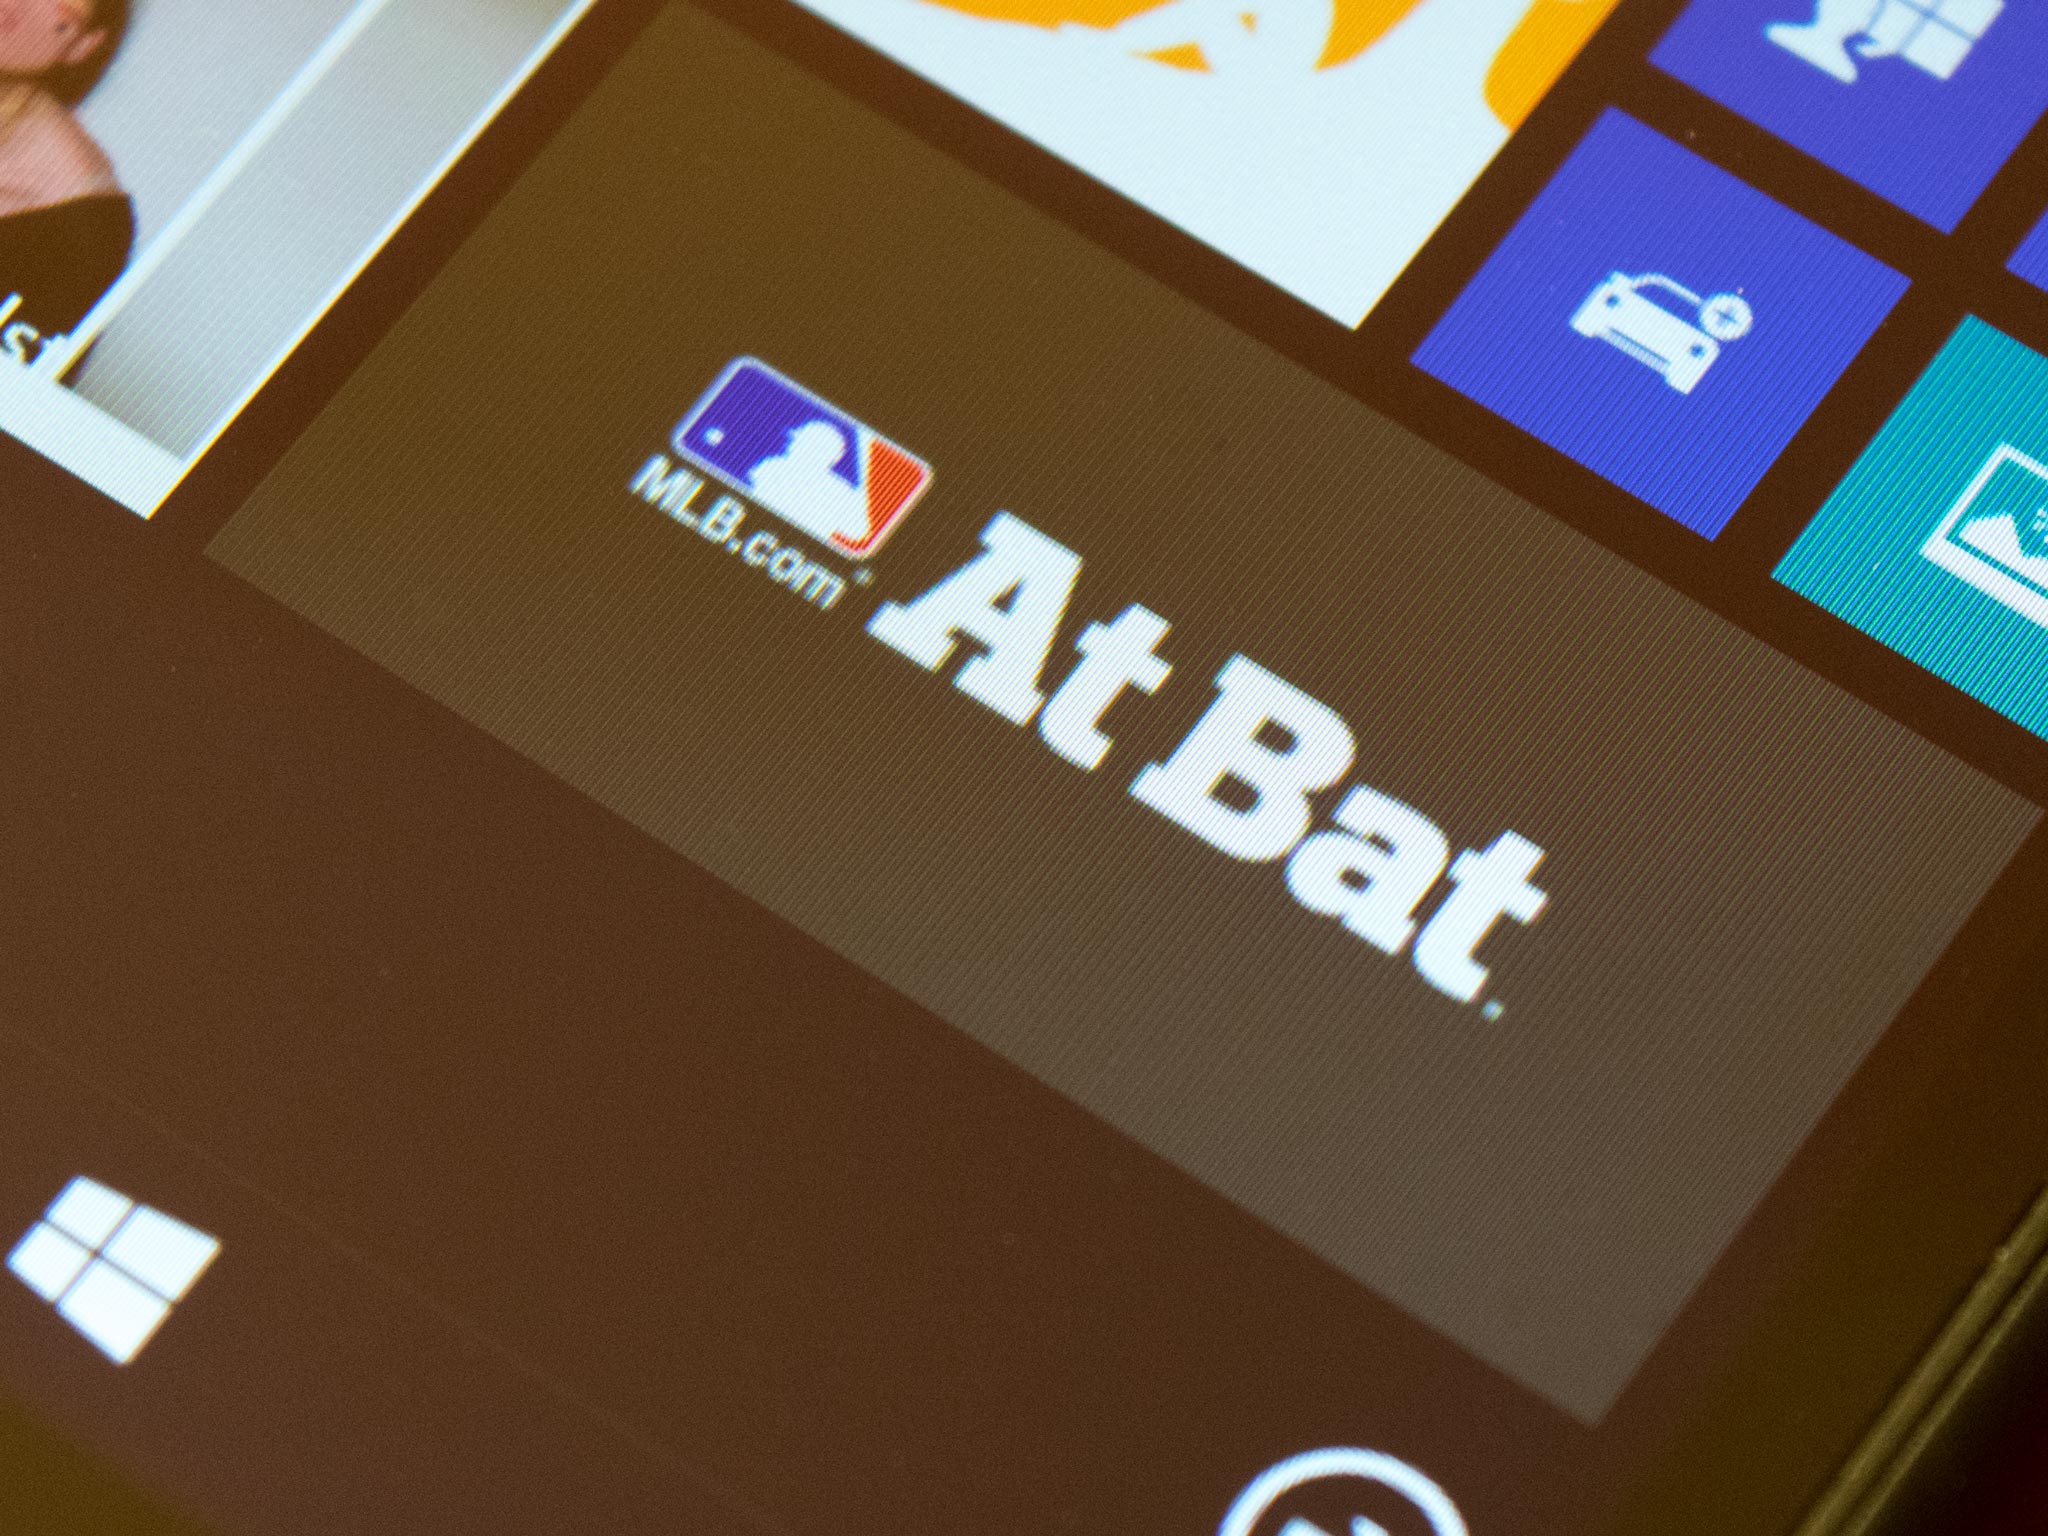 MLB will not update At Bat Windows Phone app for 2015 season